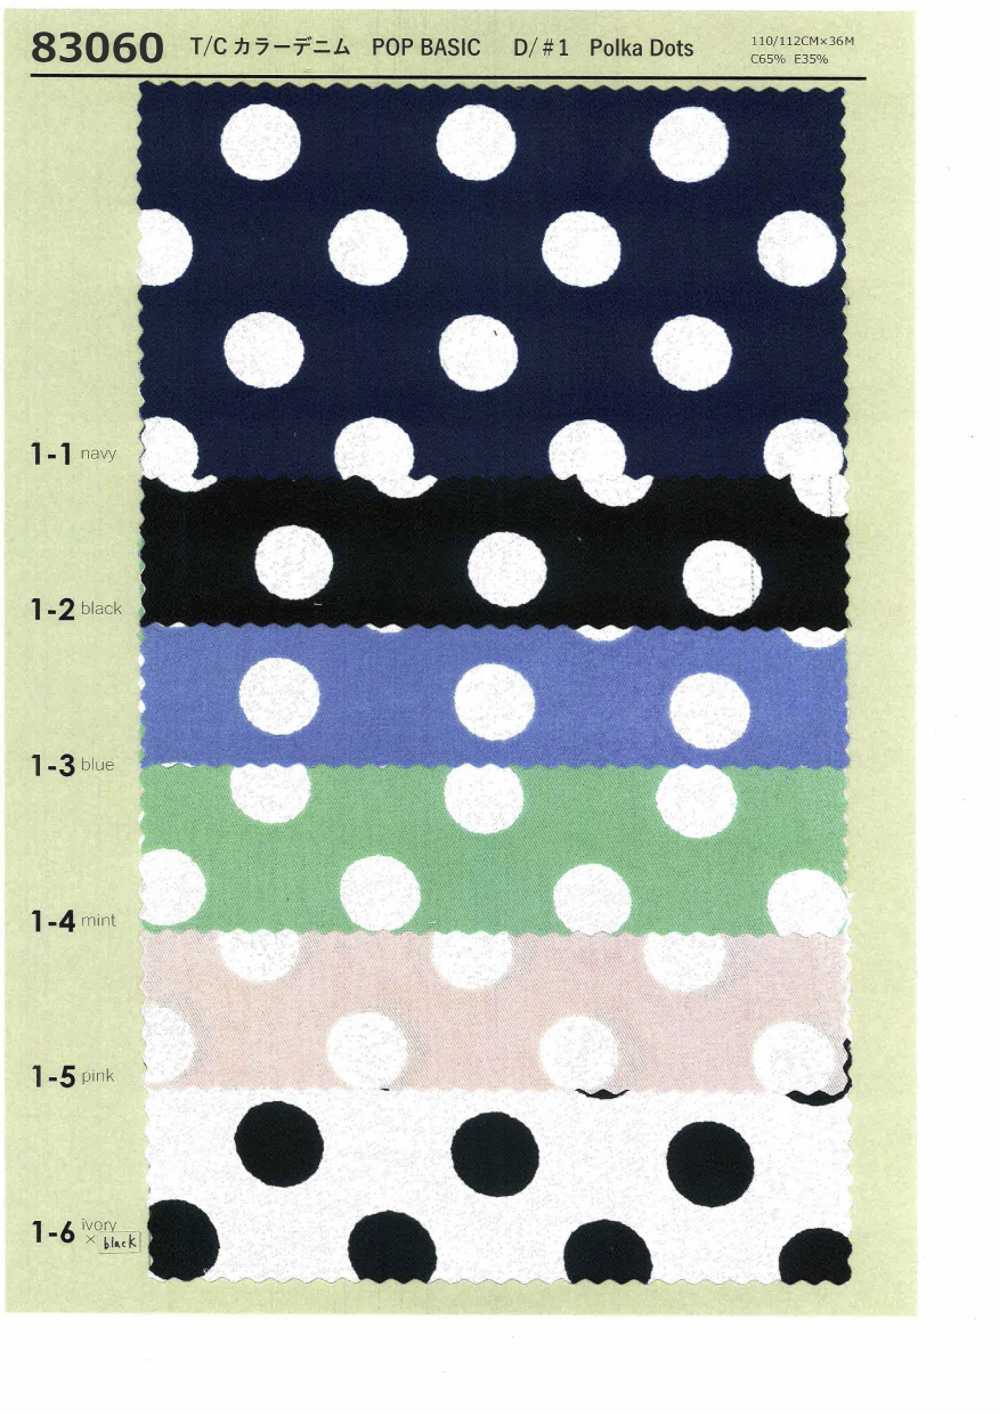 83060 T/C Color Denim Estampado Lunares, Flores, Cuadros[Fabrica Textil] VANCET